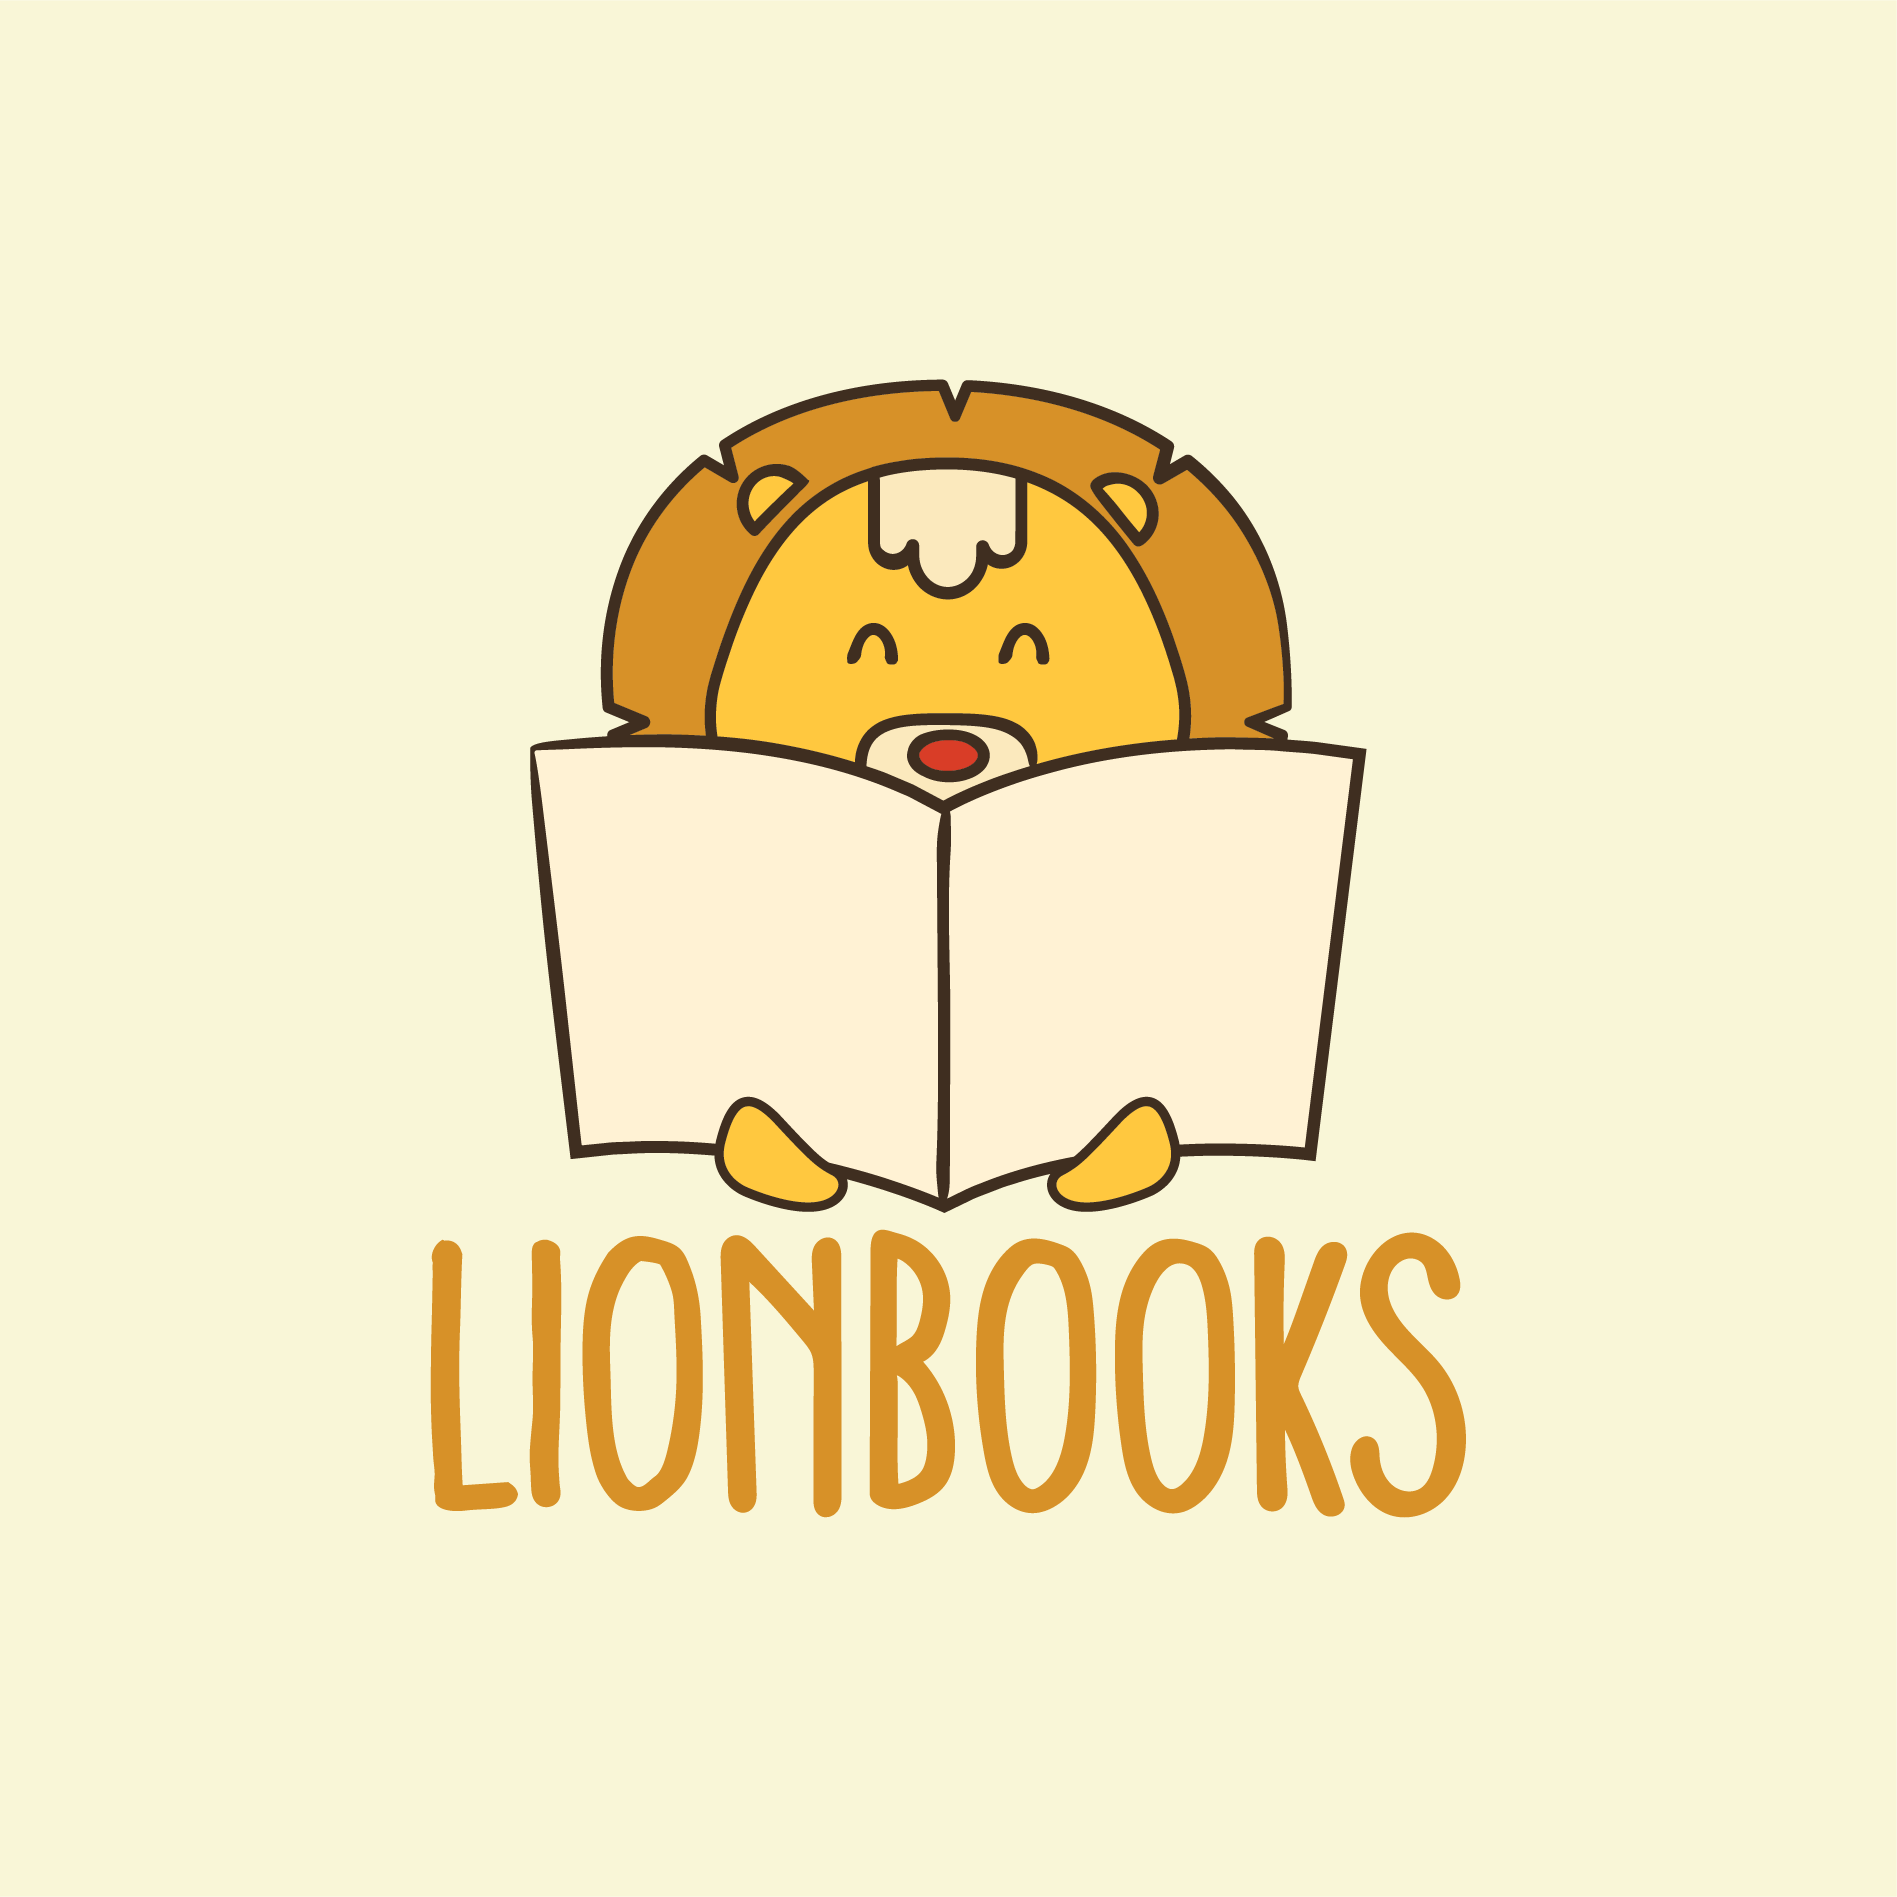 Lionbooks